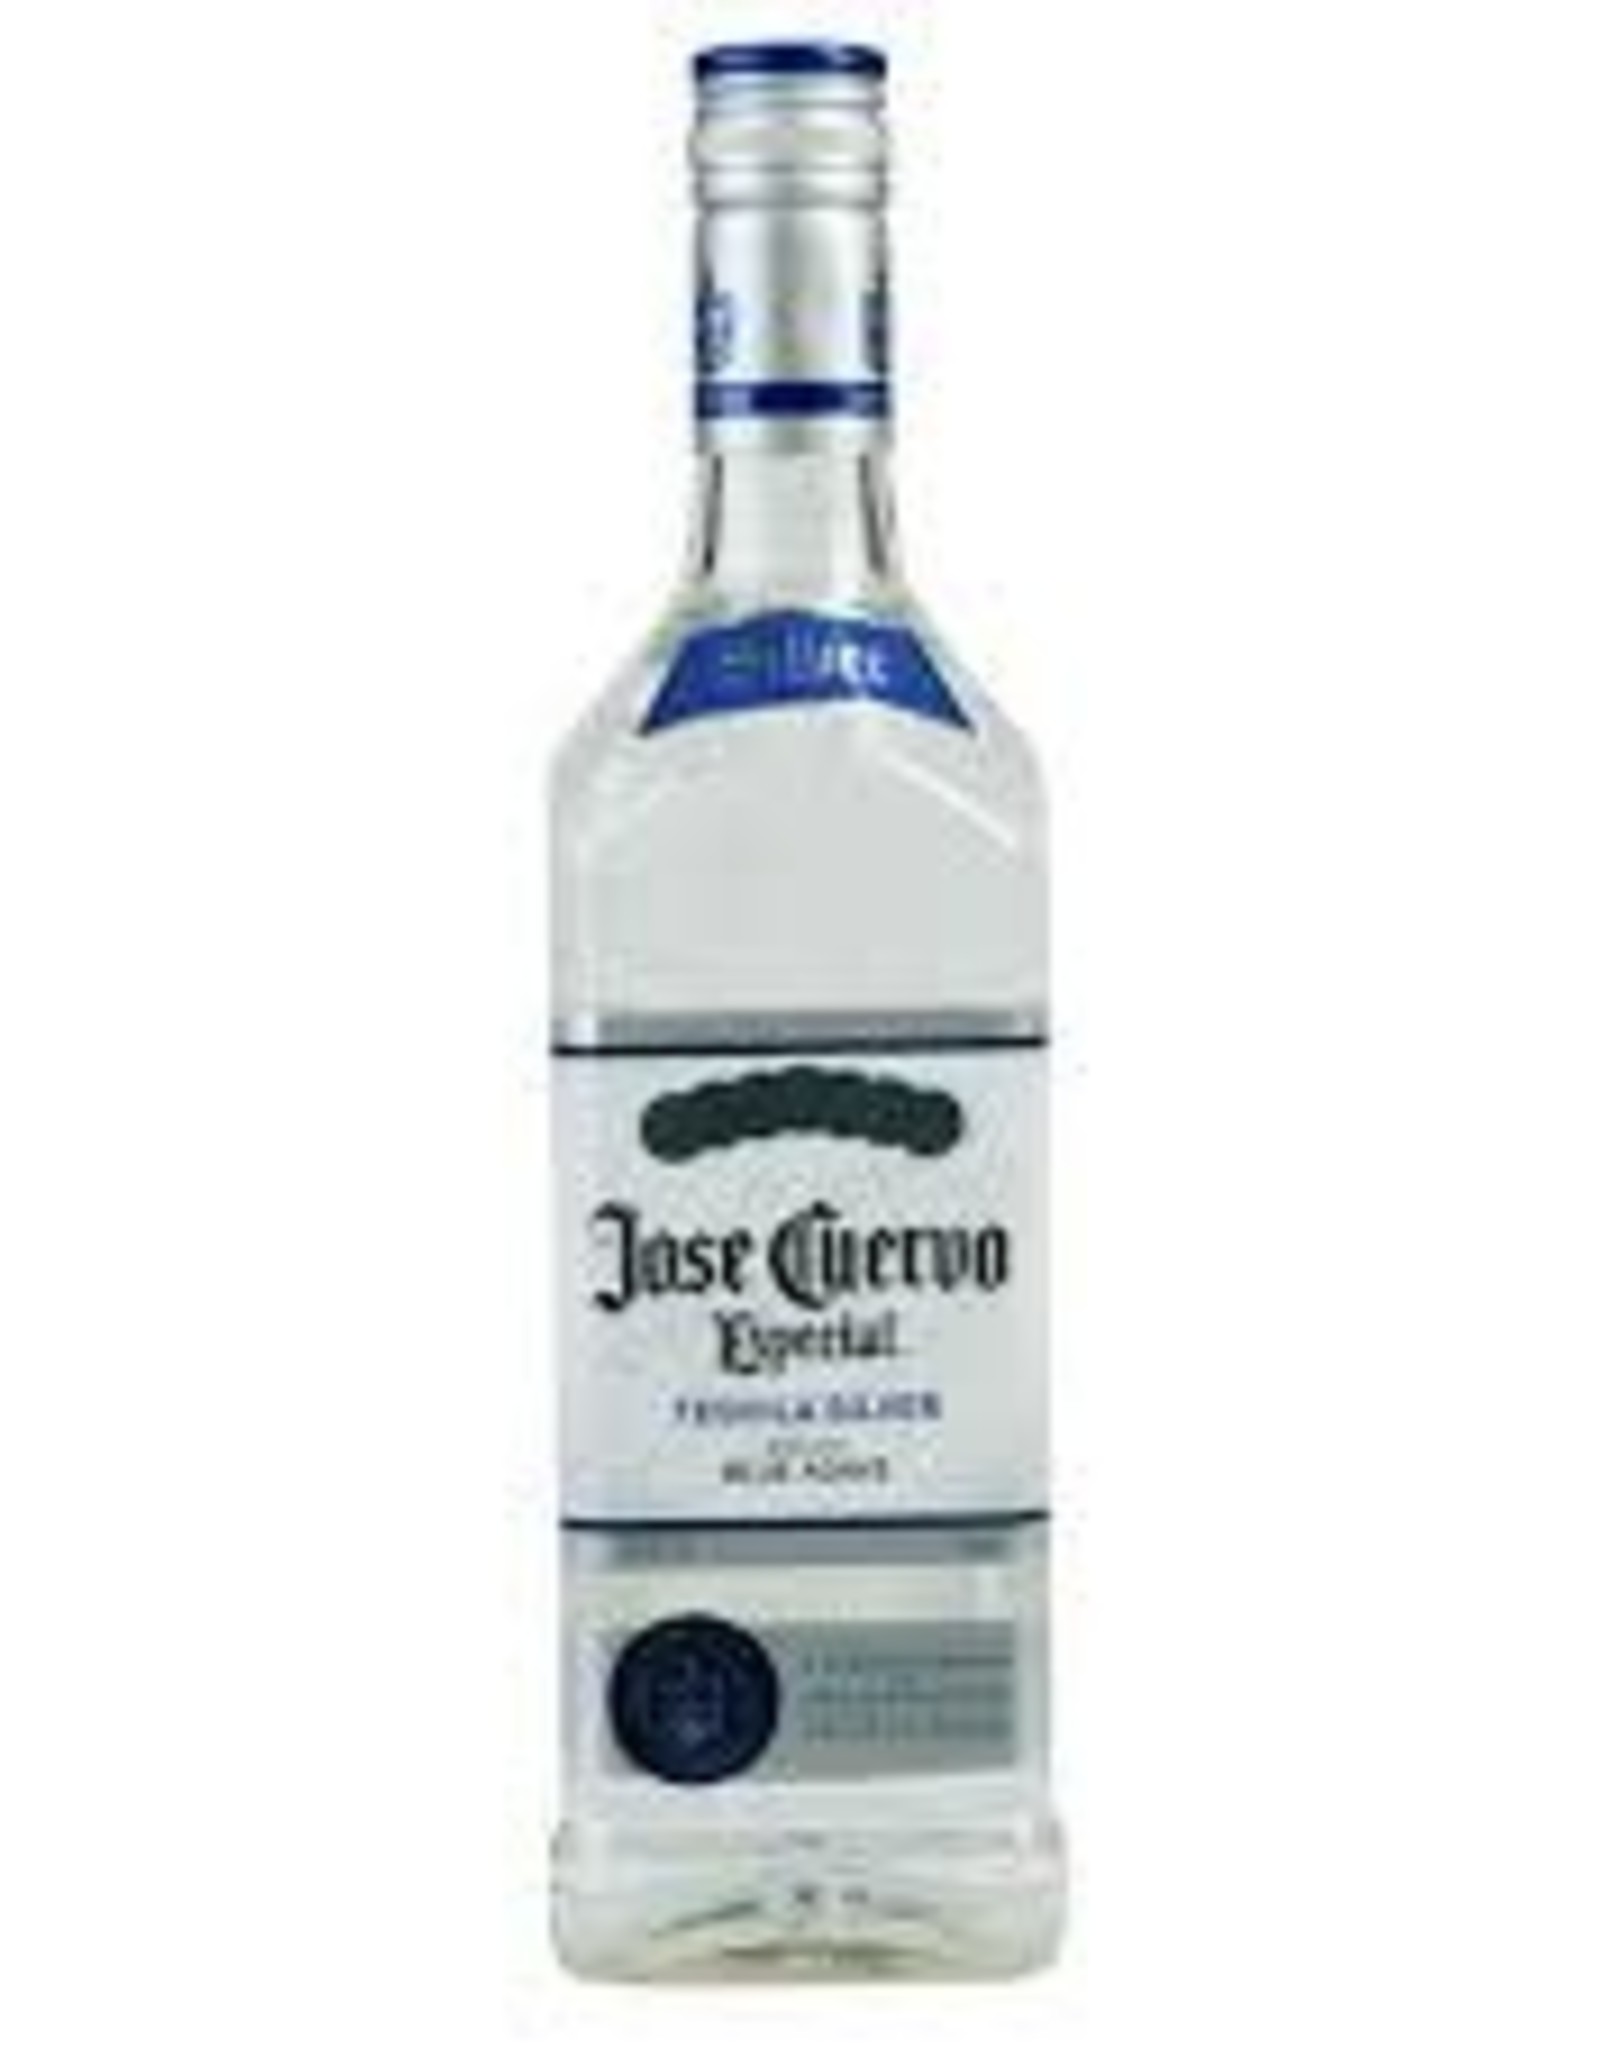 Jose Cuervo Jose Cuervo Silver Tequila